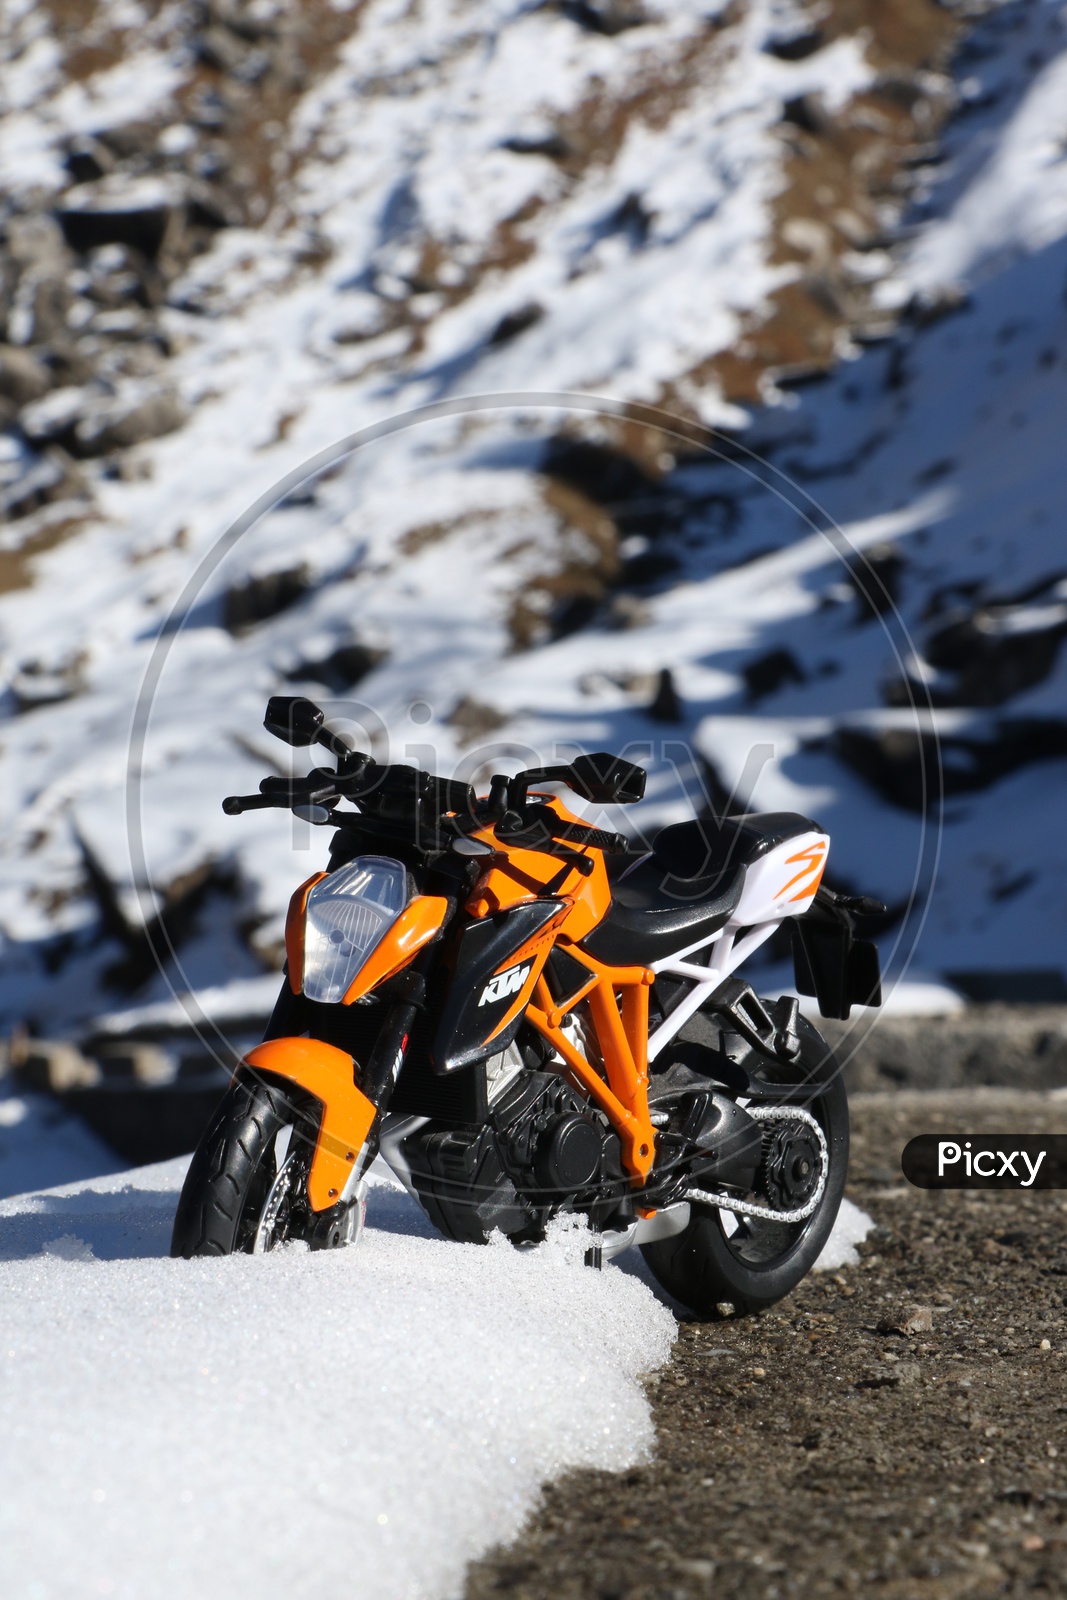 KTM sports bike toy in the snow